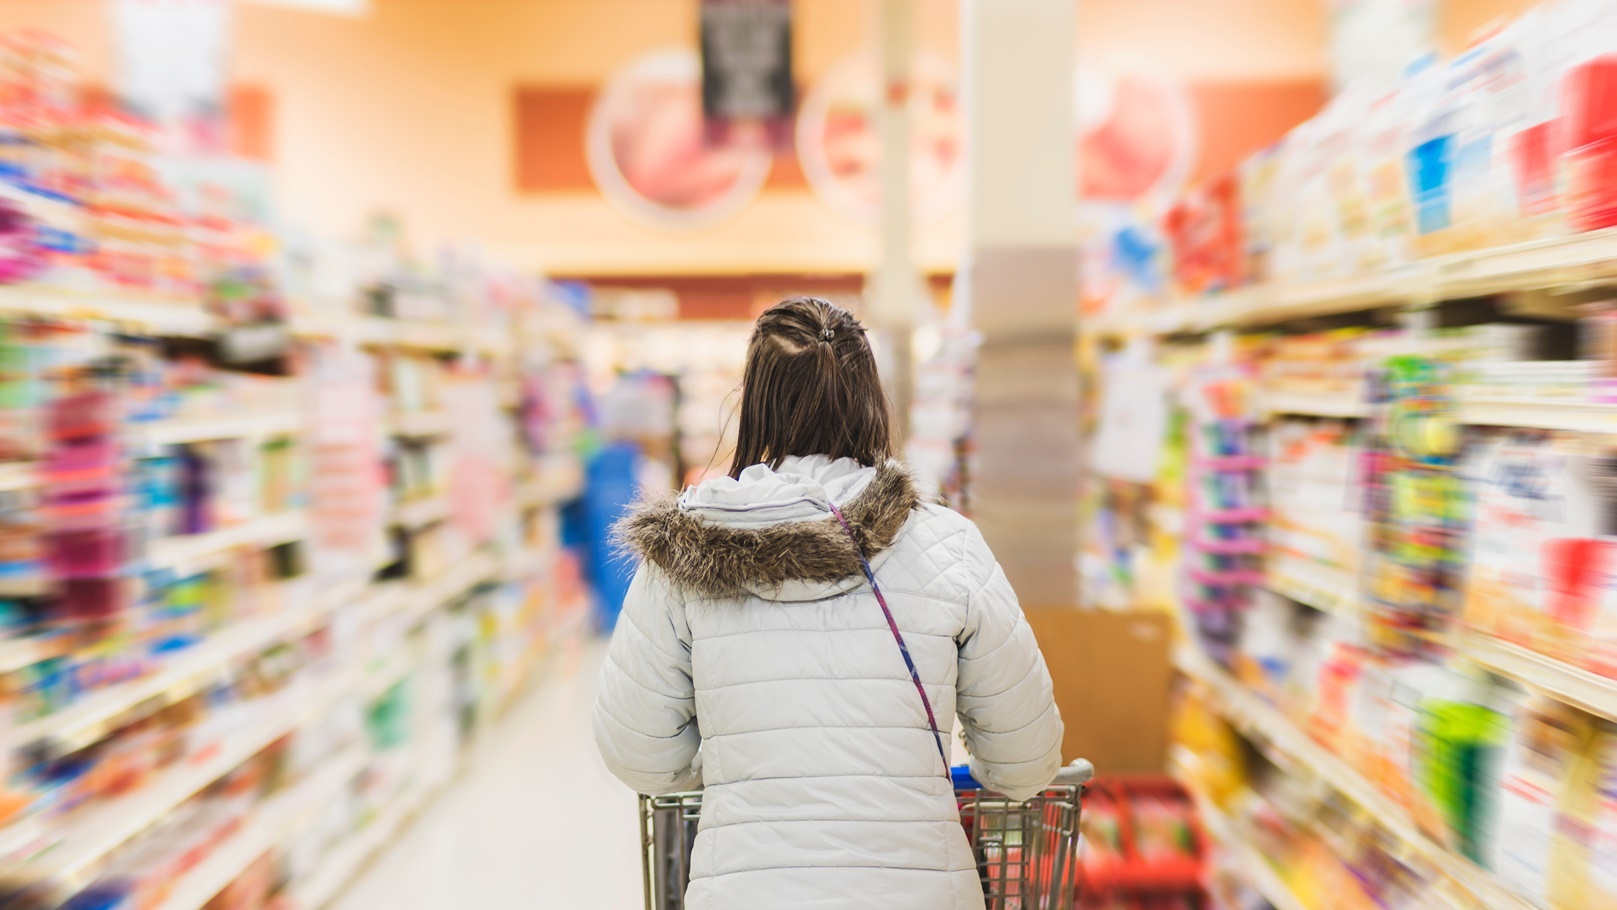 grocery-shopping-millennial-woman-in-grocery-stor-2021-10-14-18-51-01-utc